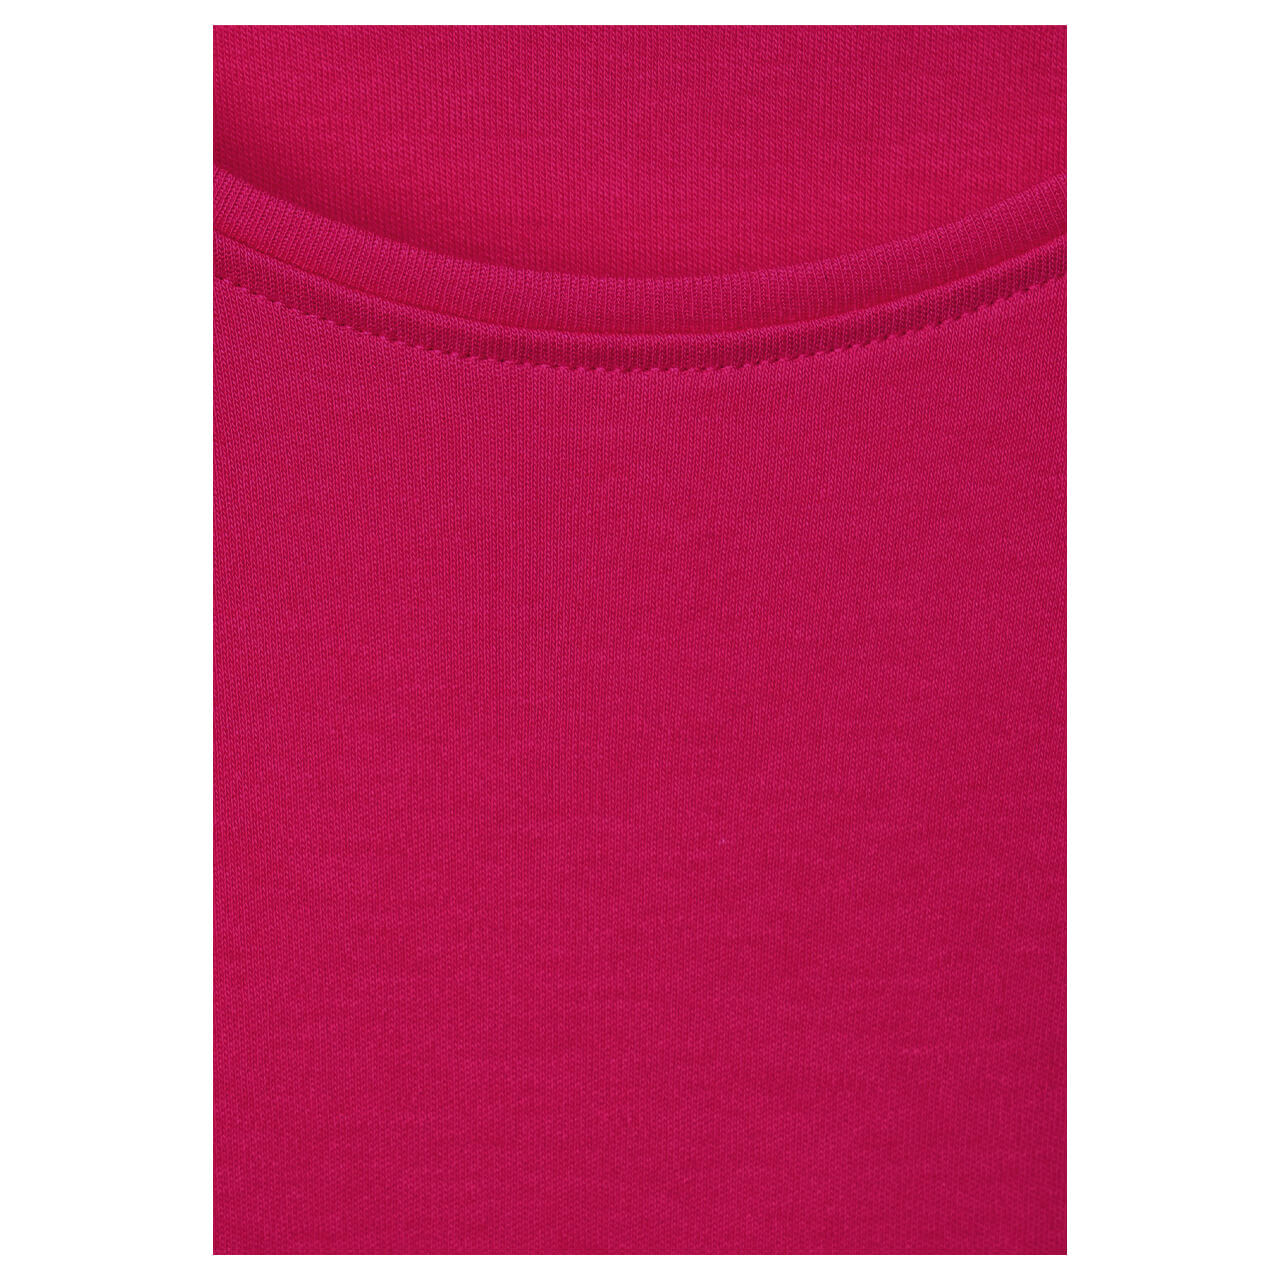 Cecil Langarm Shirt Pia Pink kaufen 15068 | in